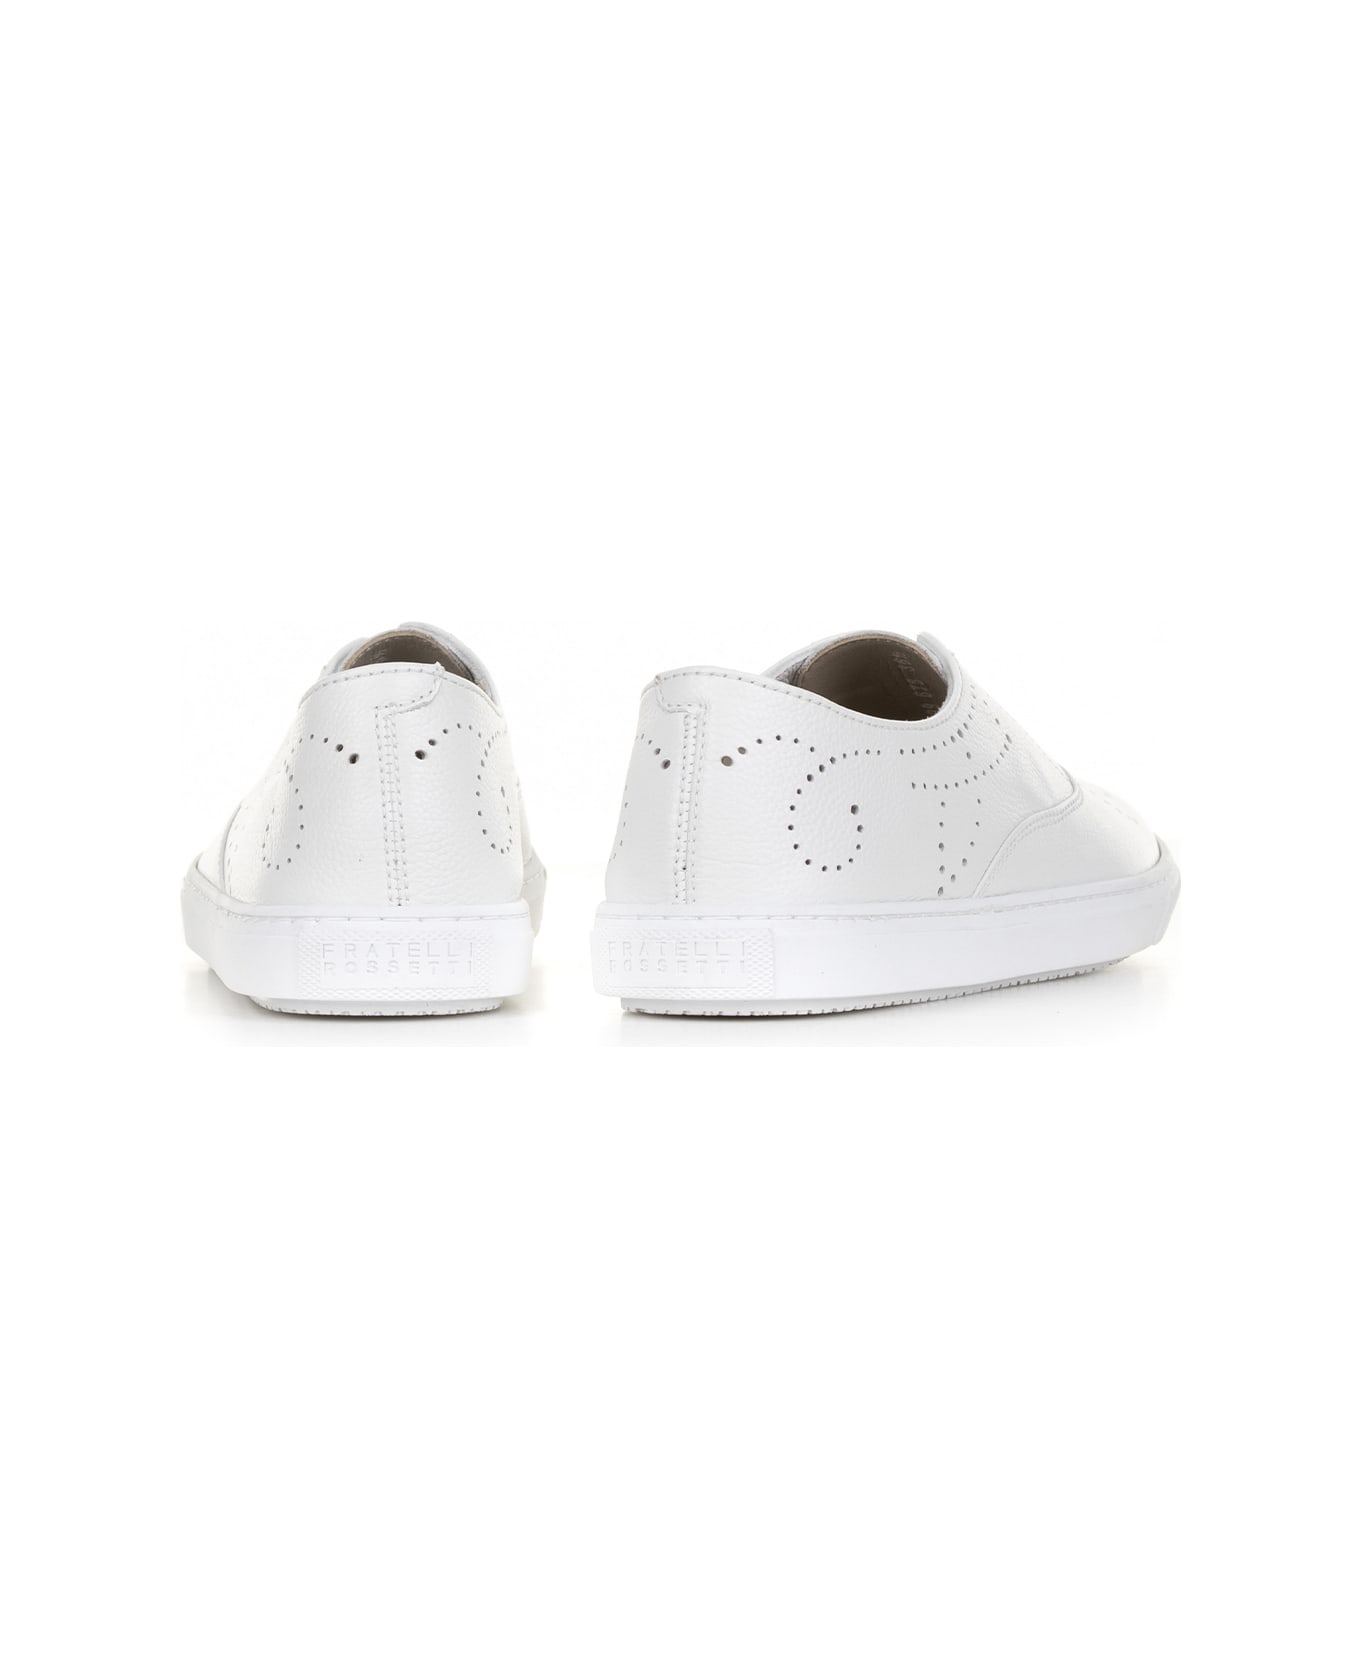 Fratelli Rossetti One White Leather Slip-on Sneaker - BIANCO